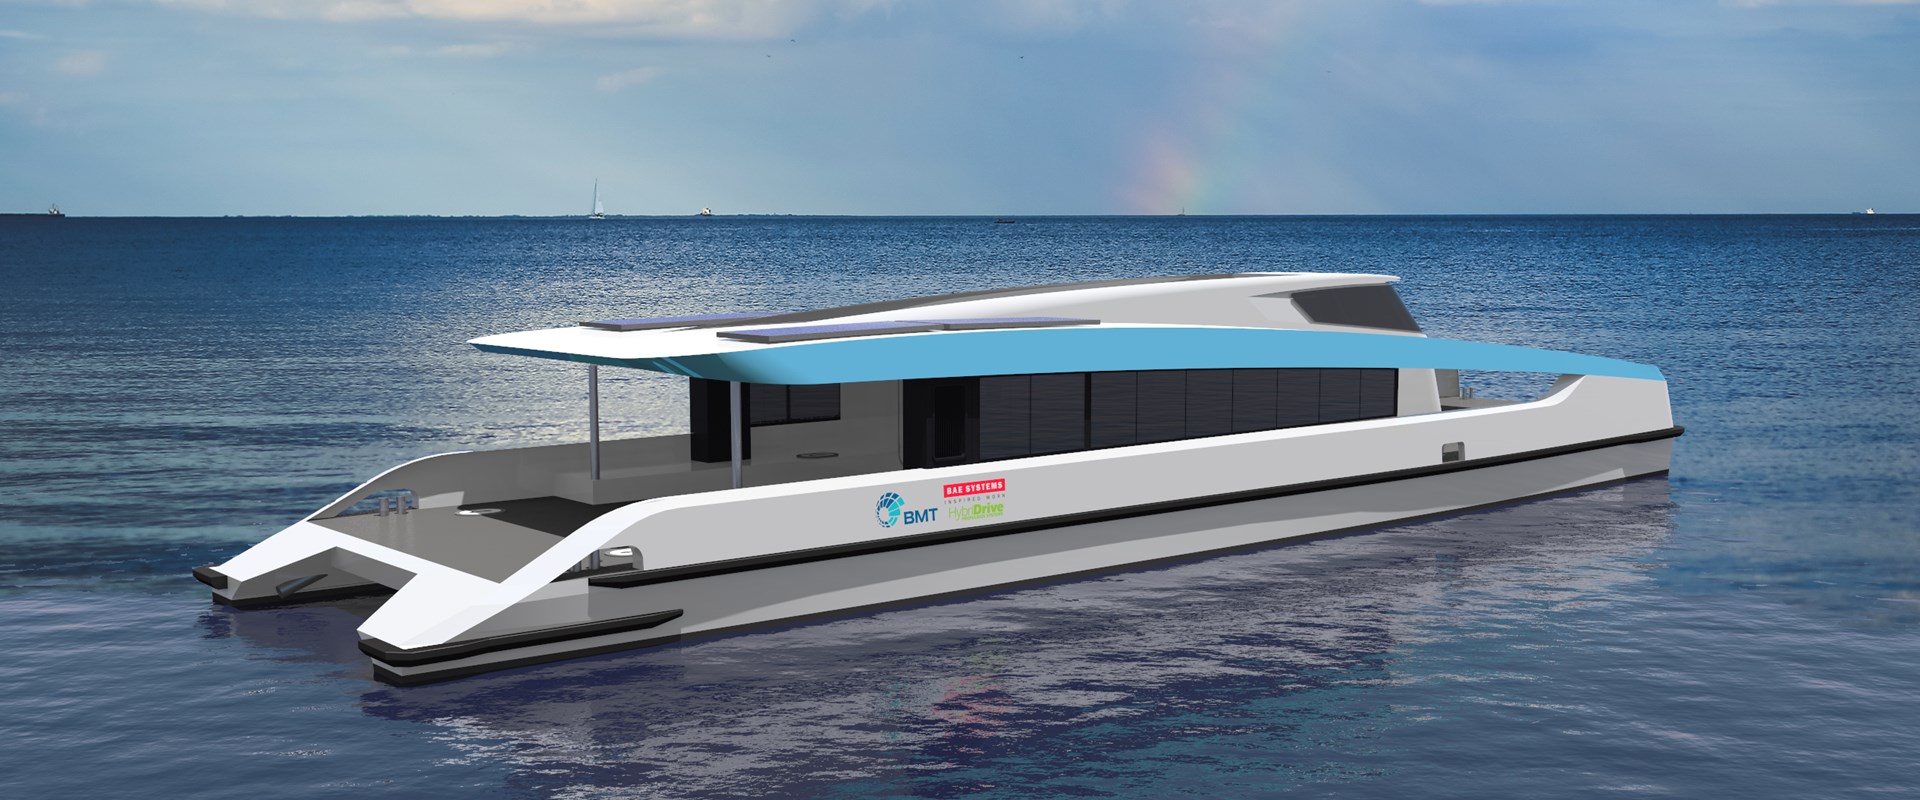 A new hybrid eco ferry design at sea